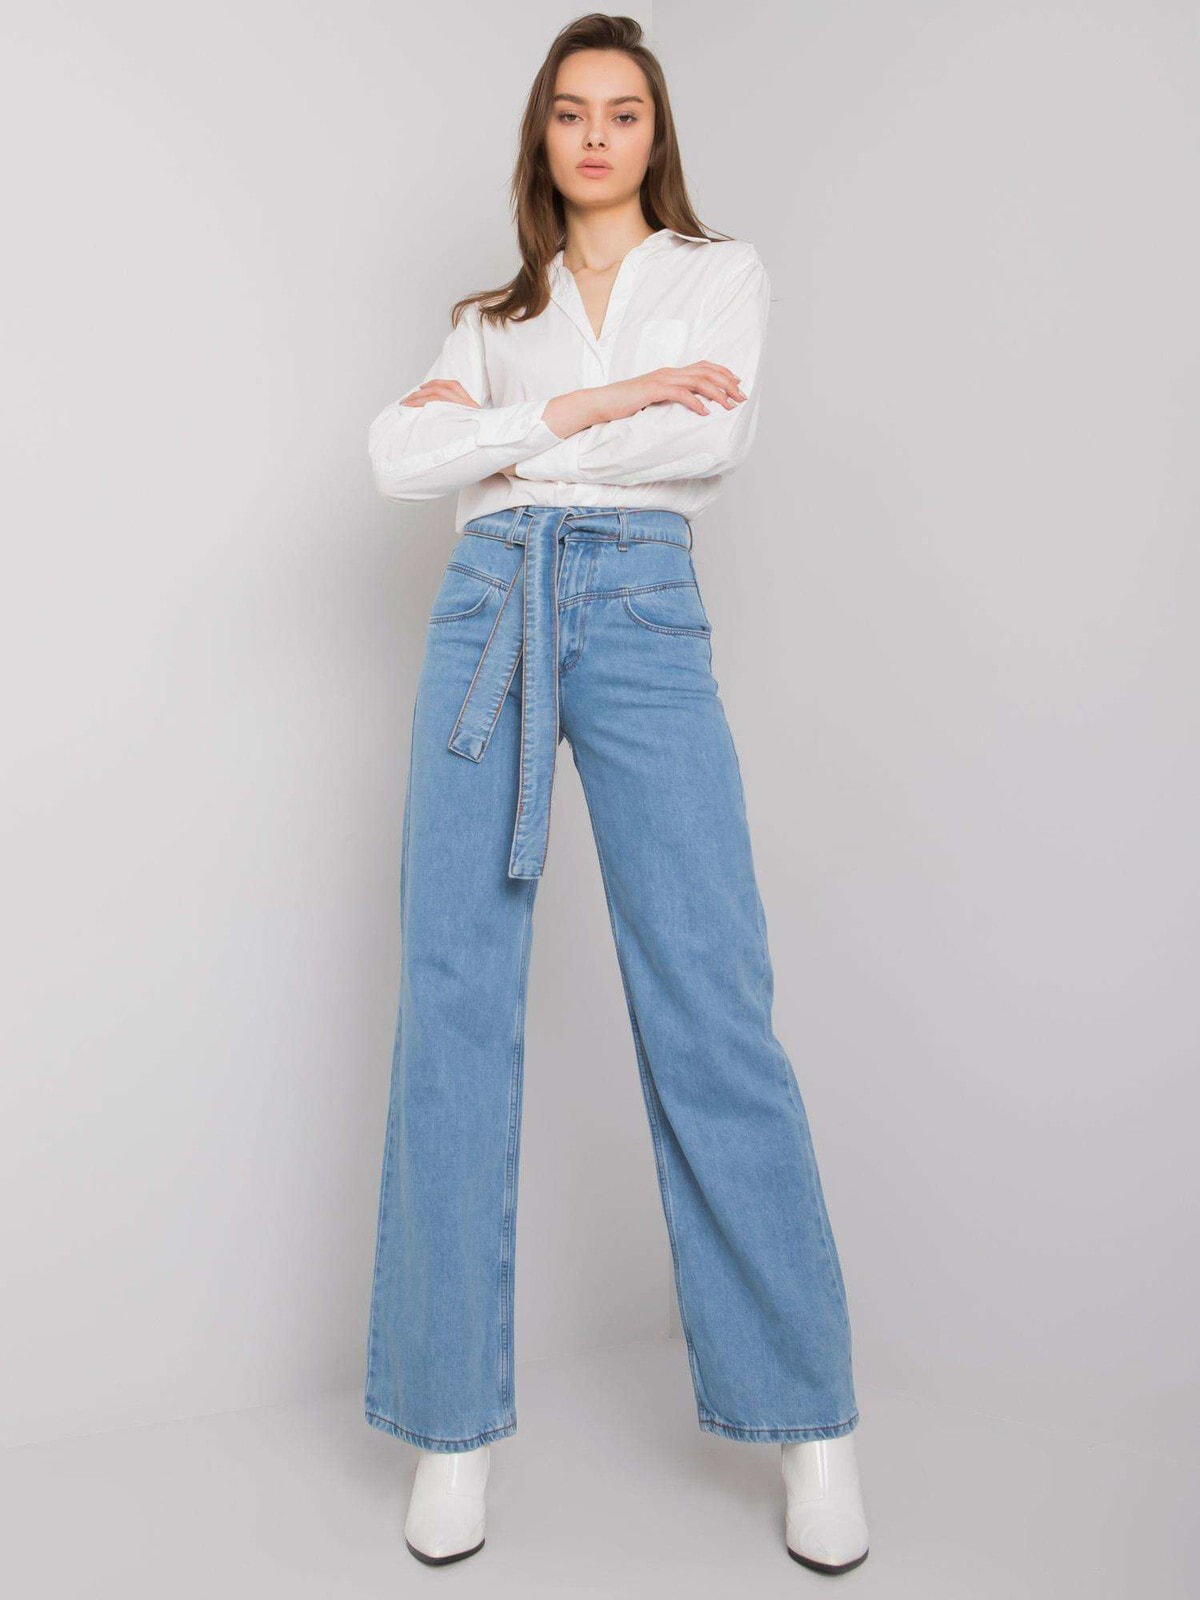 Женские синие джинсы Factory Price Spodnie jeans-MR-SP-303.14P-niebieski